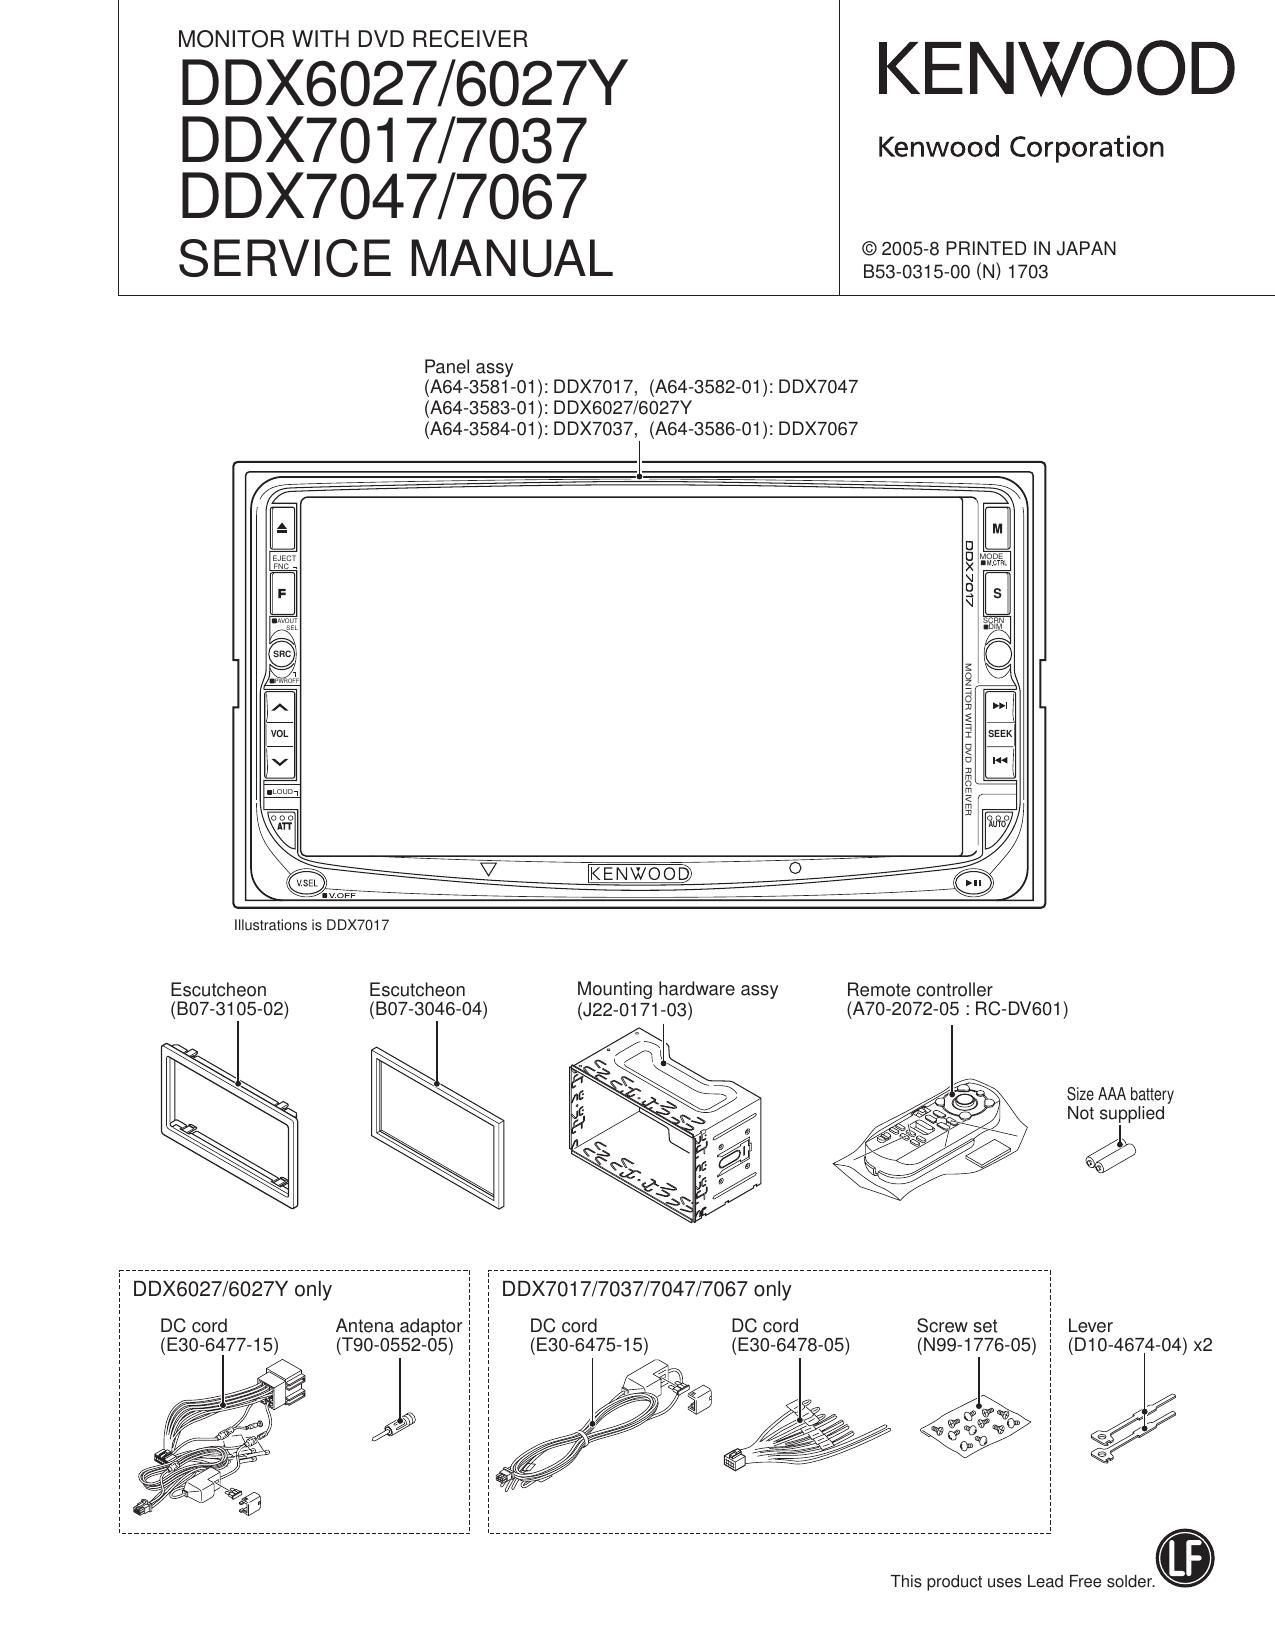 Kenwood DDX 6027 HU Service Manual